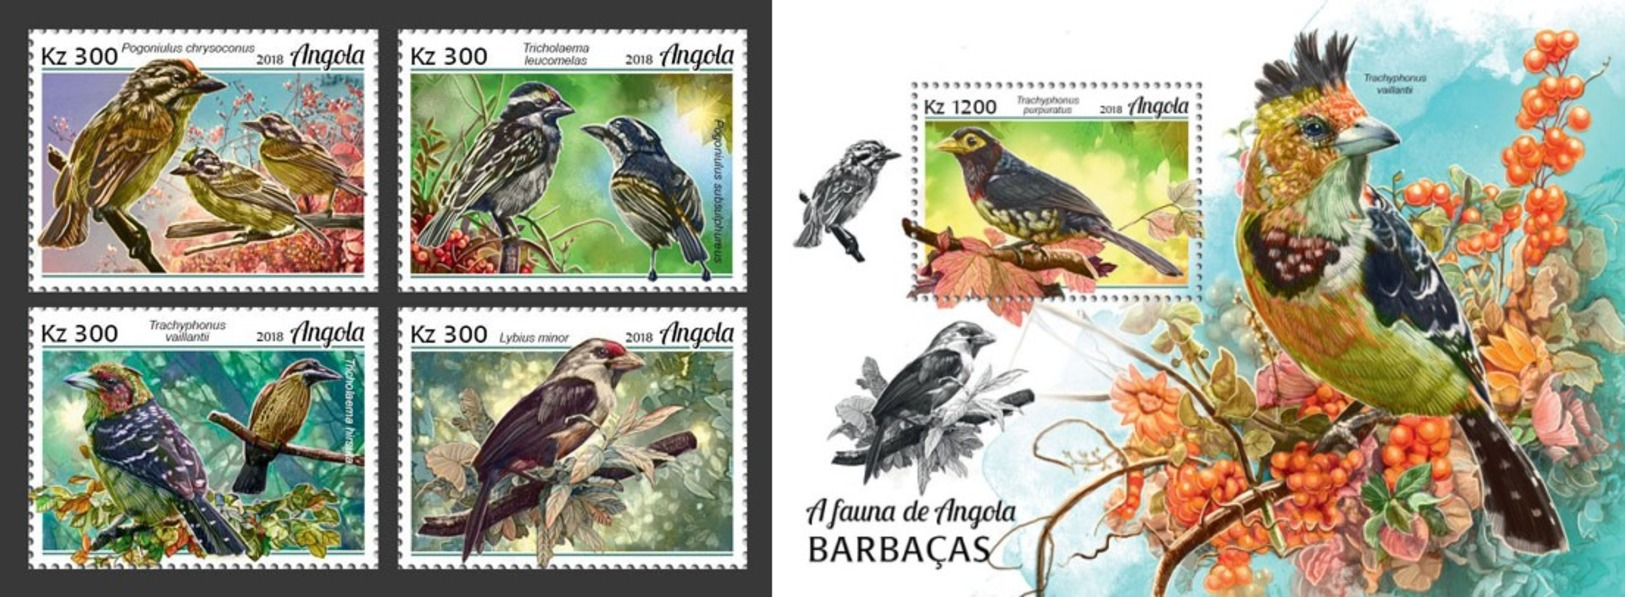 Z08 ANG18127ab Angola 2018 Birds Vogel Barbets MNH ** Postfrisch Set - Angola